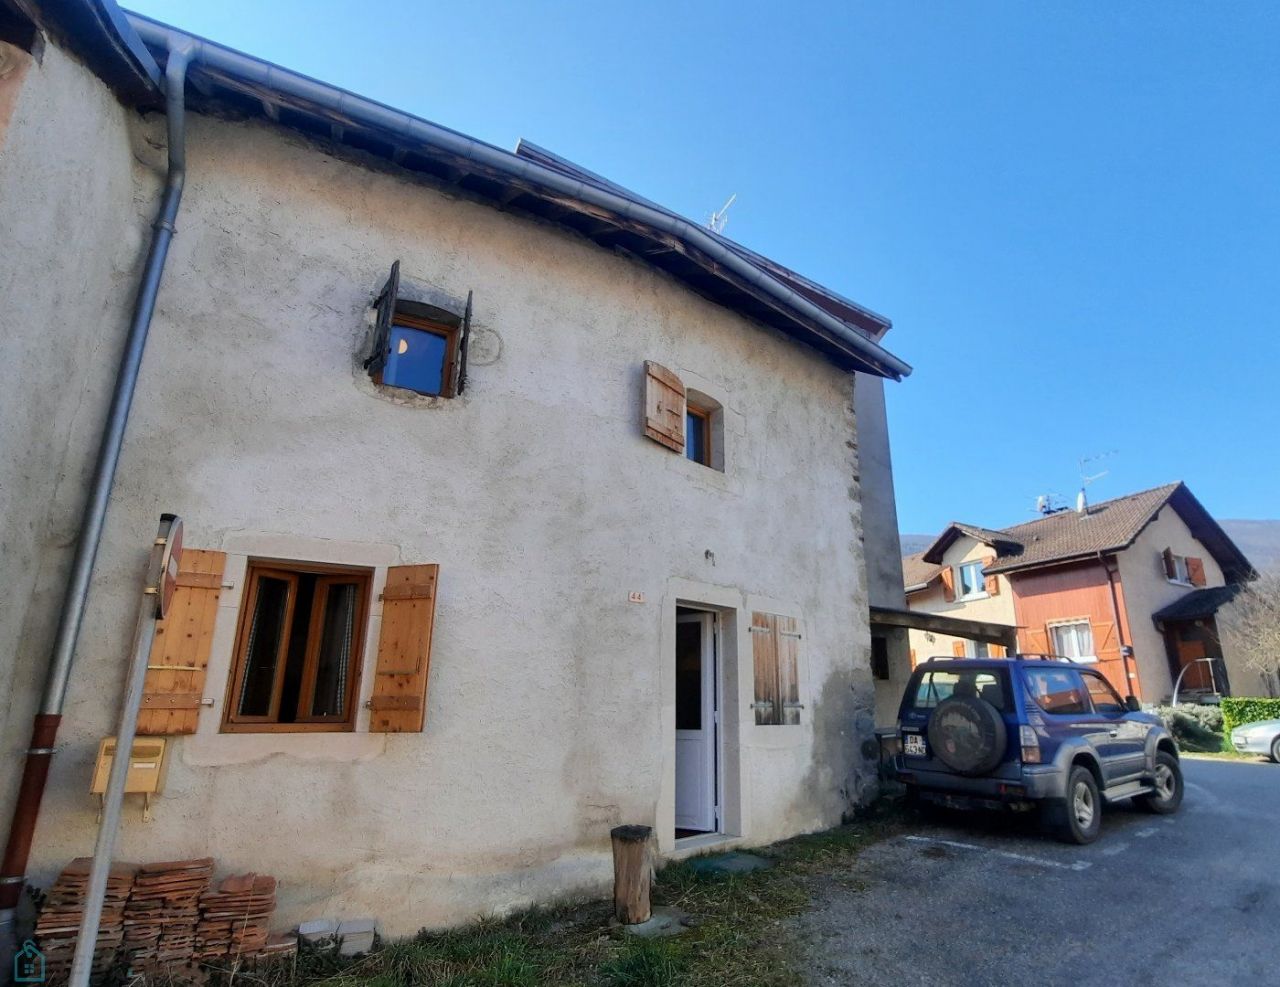 Casa en Alta Saboya, Francia - imagen 1